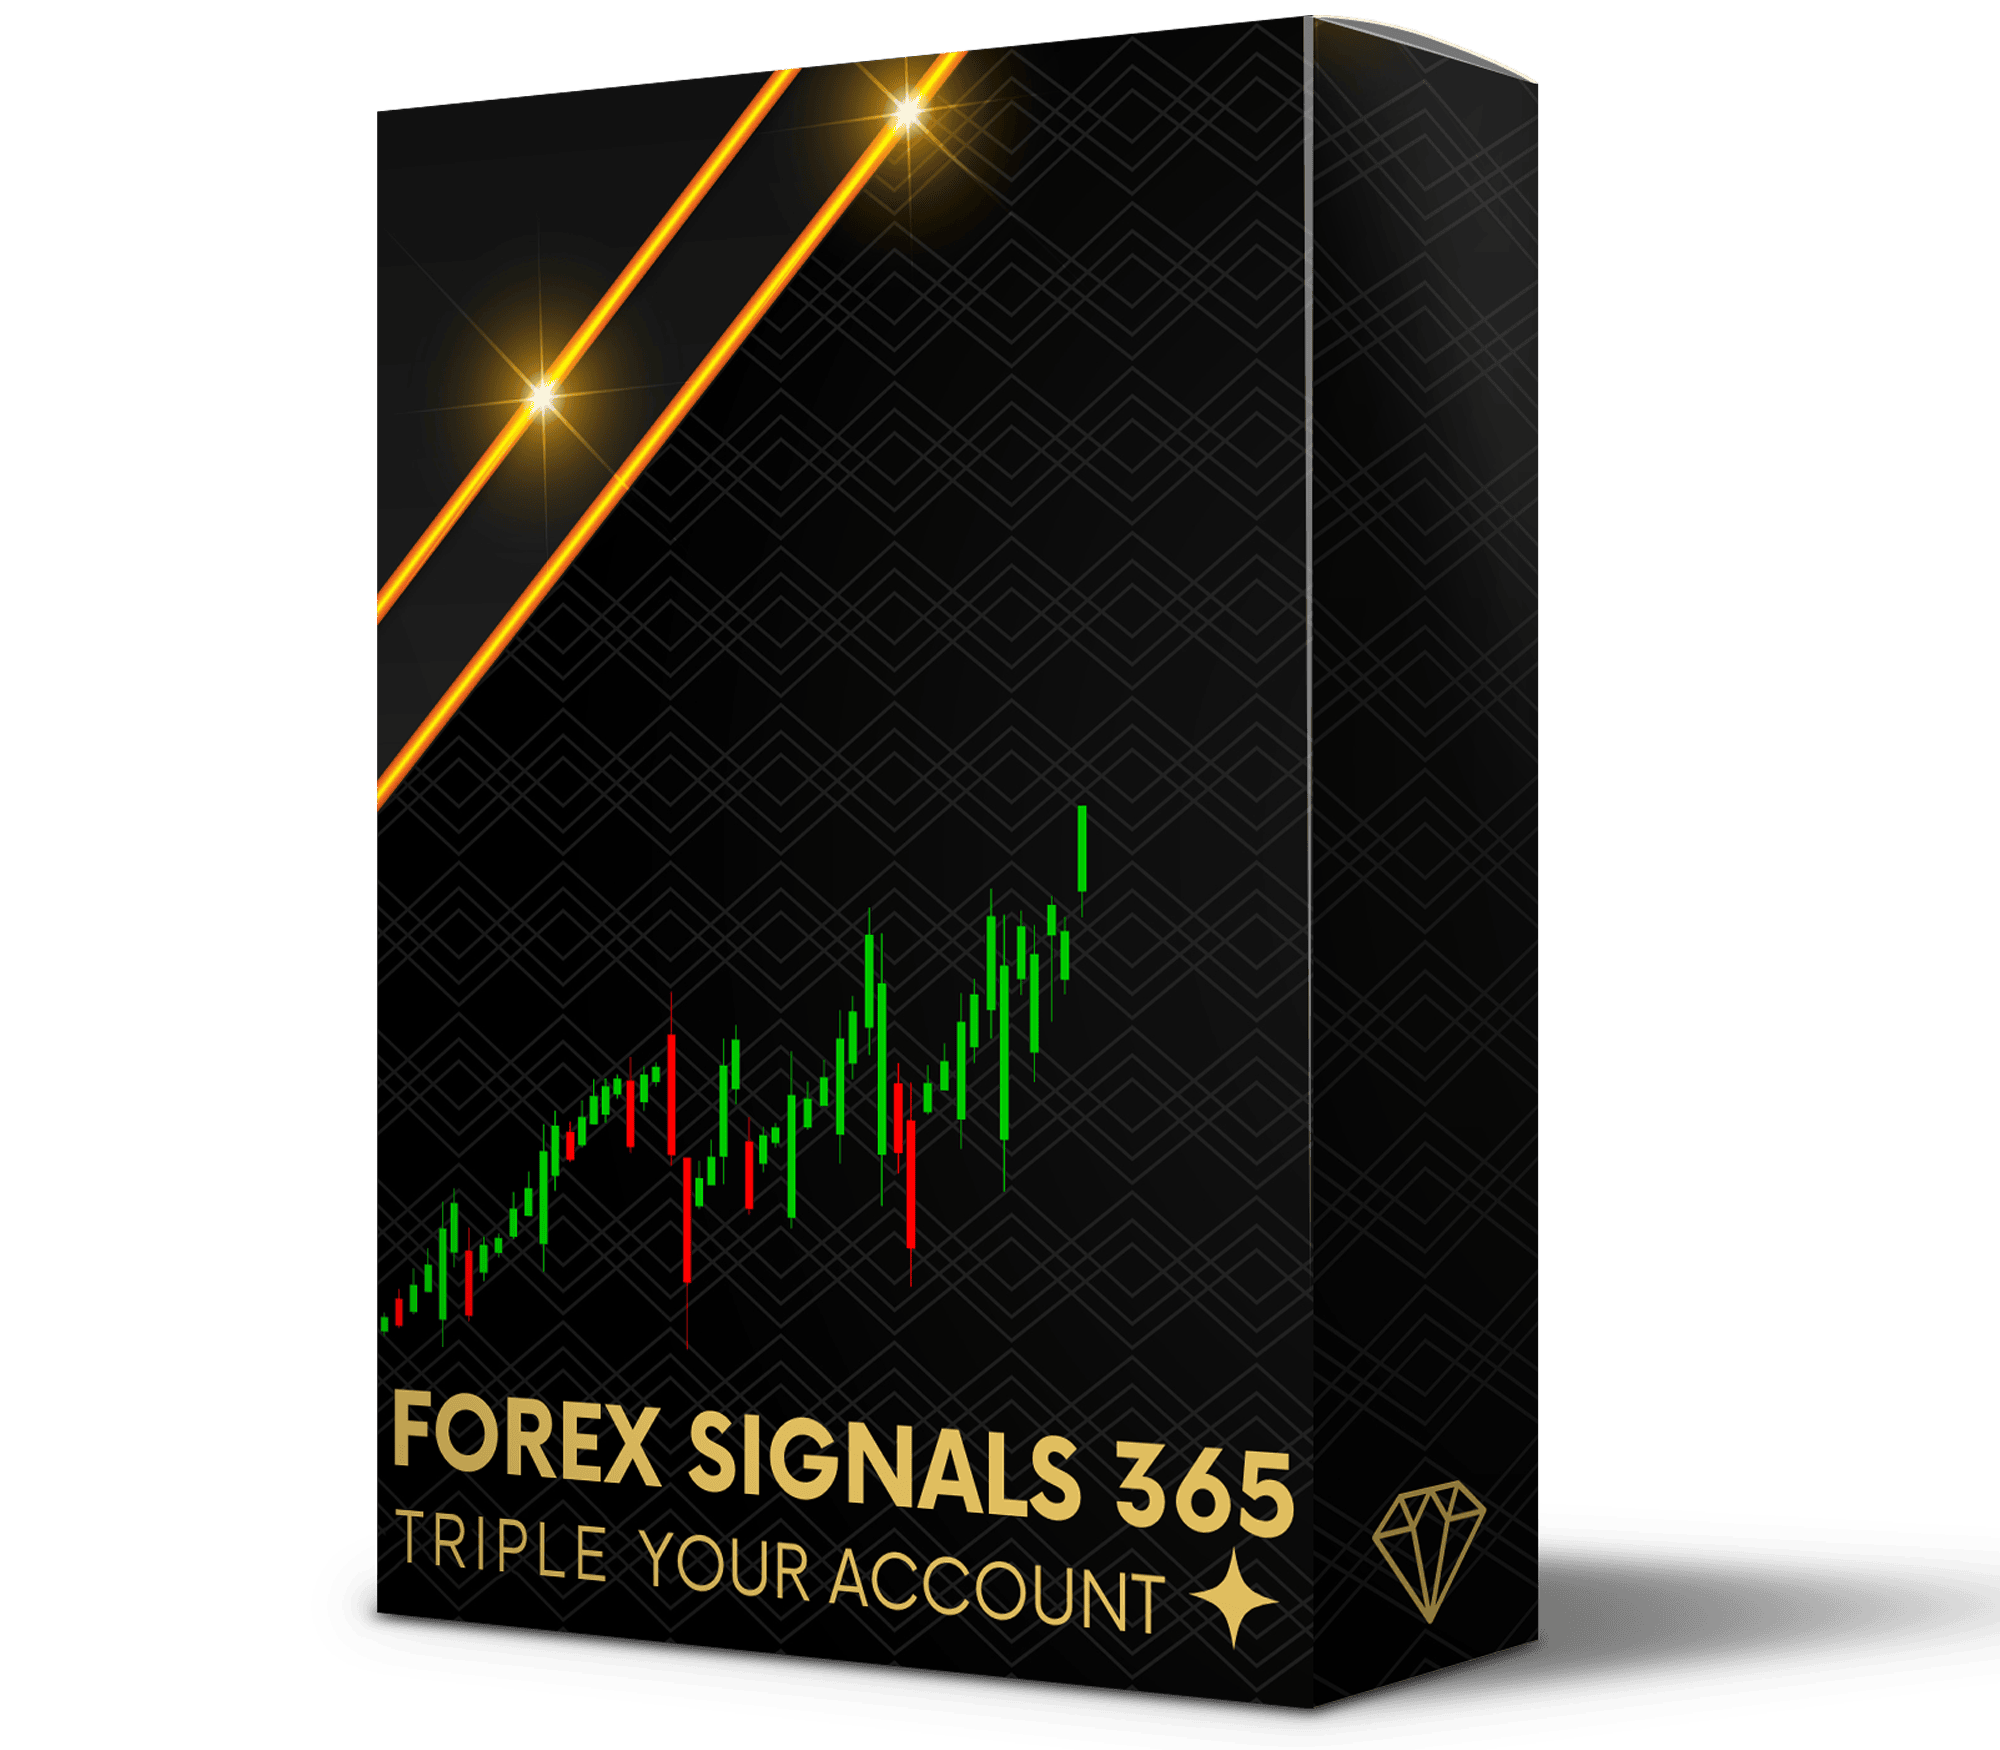 forexsignals365.com triple account